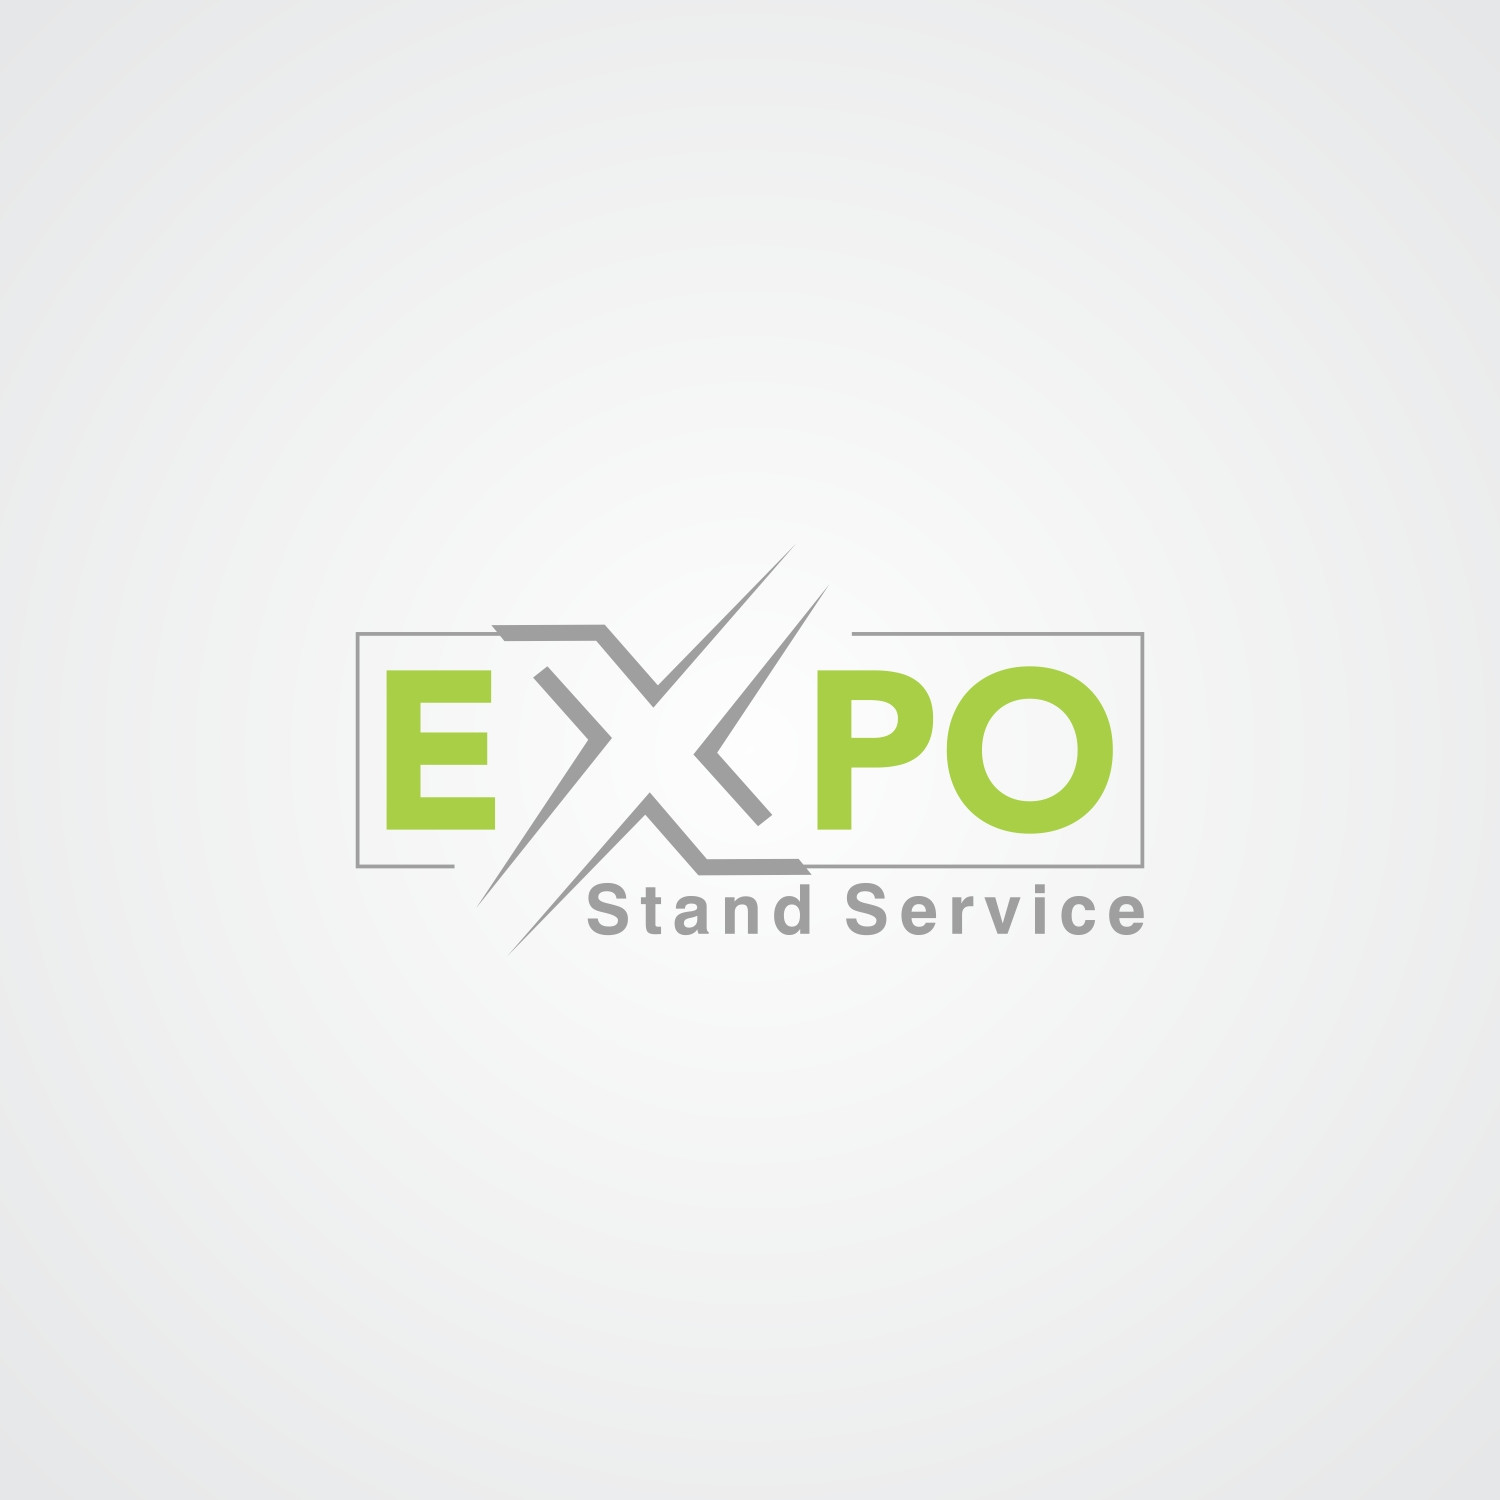 Expo Services